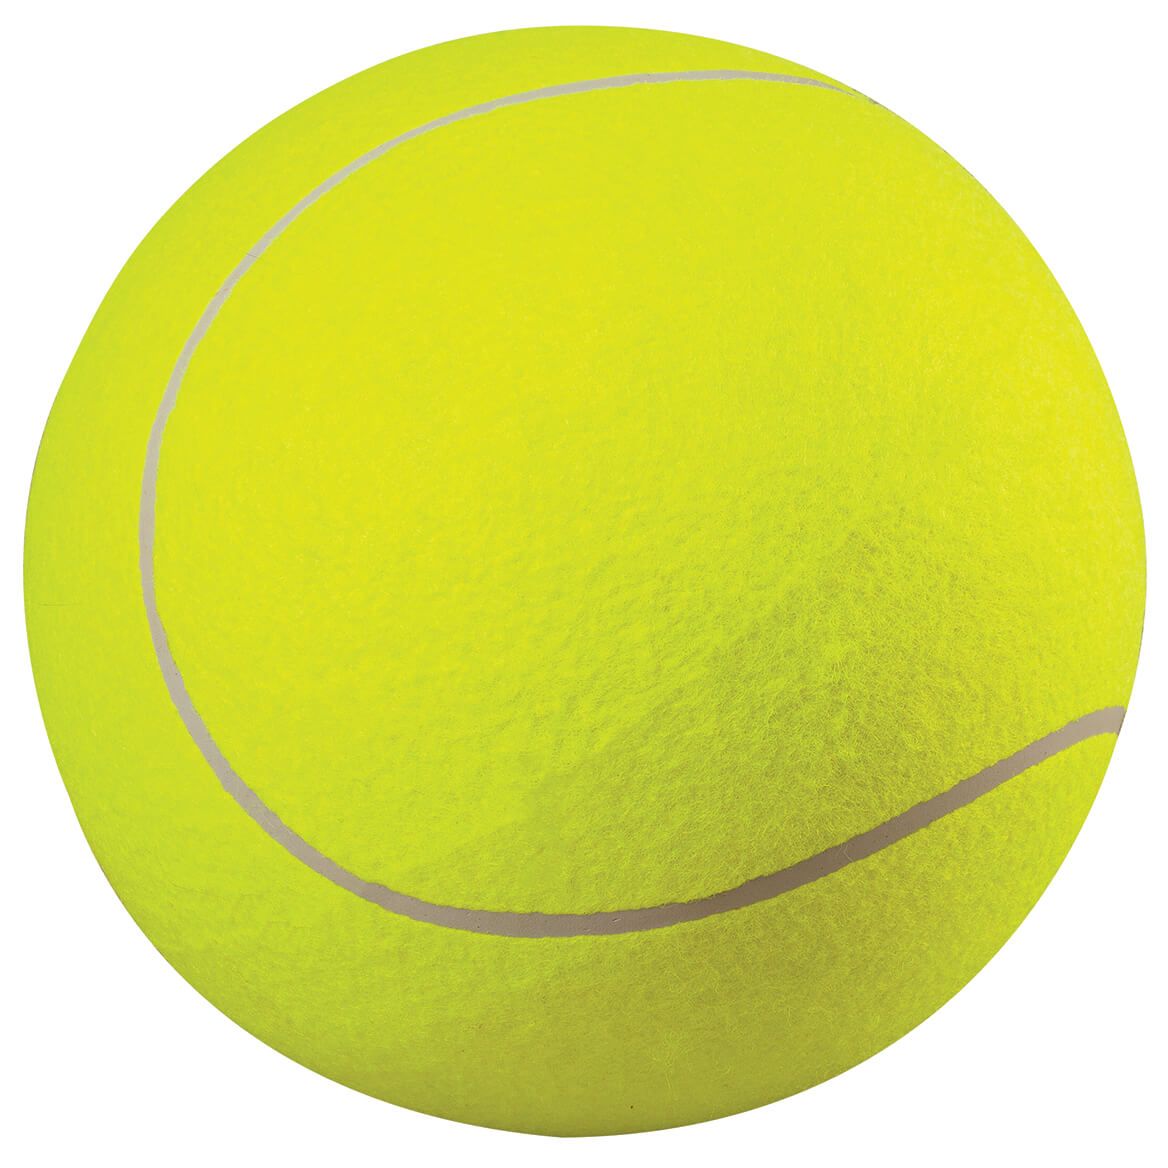 Giant Dog Tennis Ball, 9 1/2" + '-' + 373020